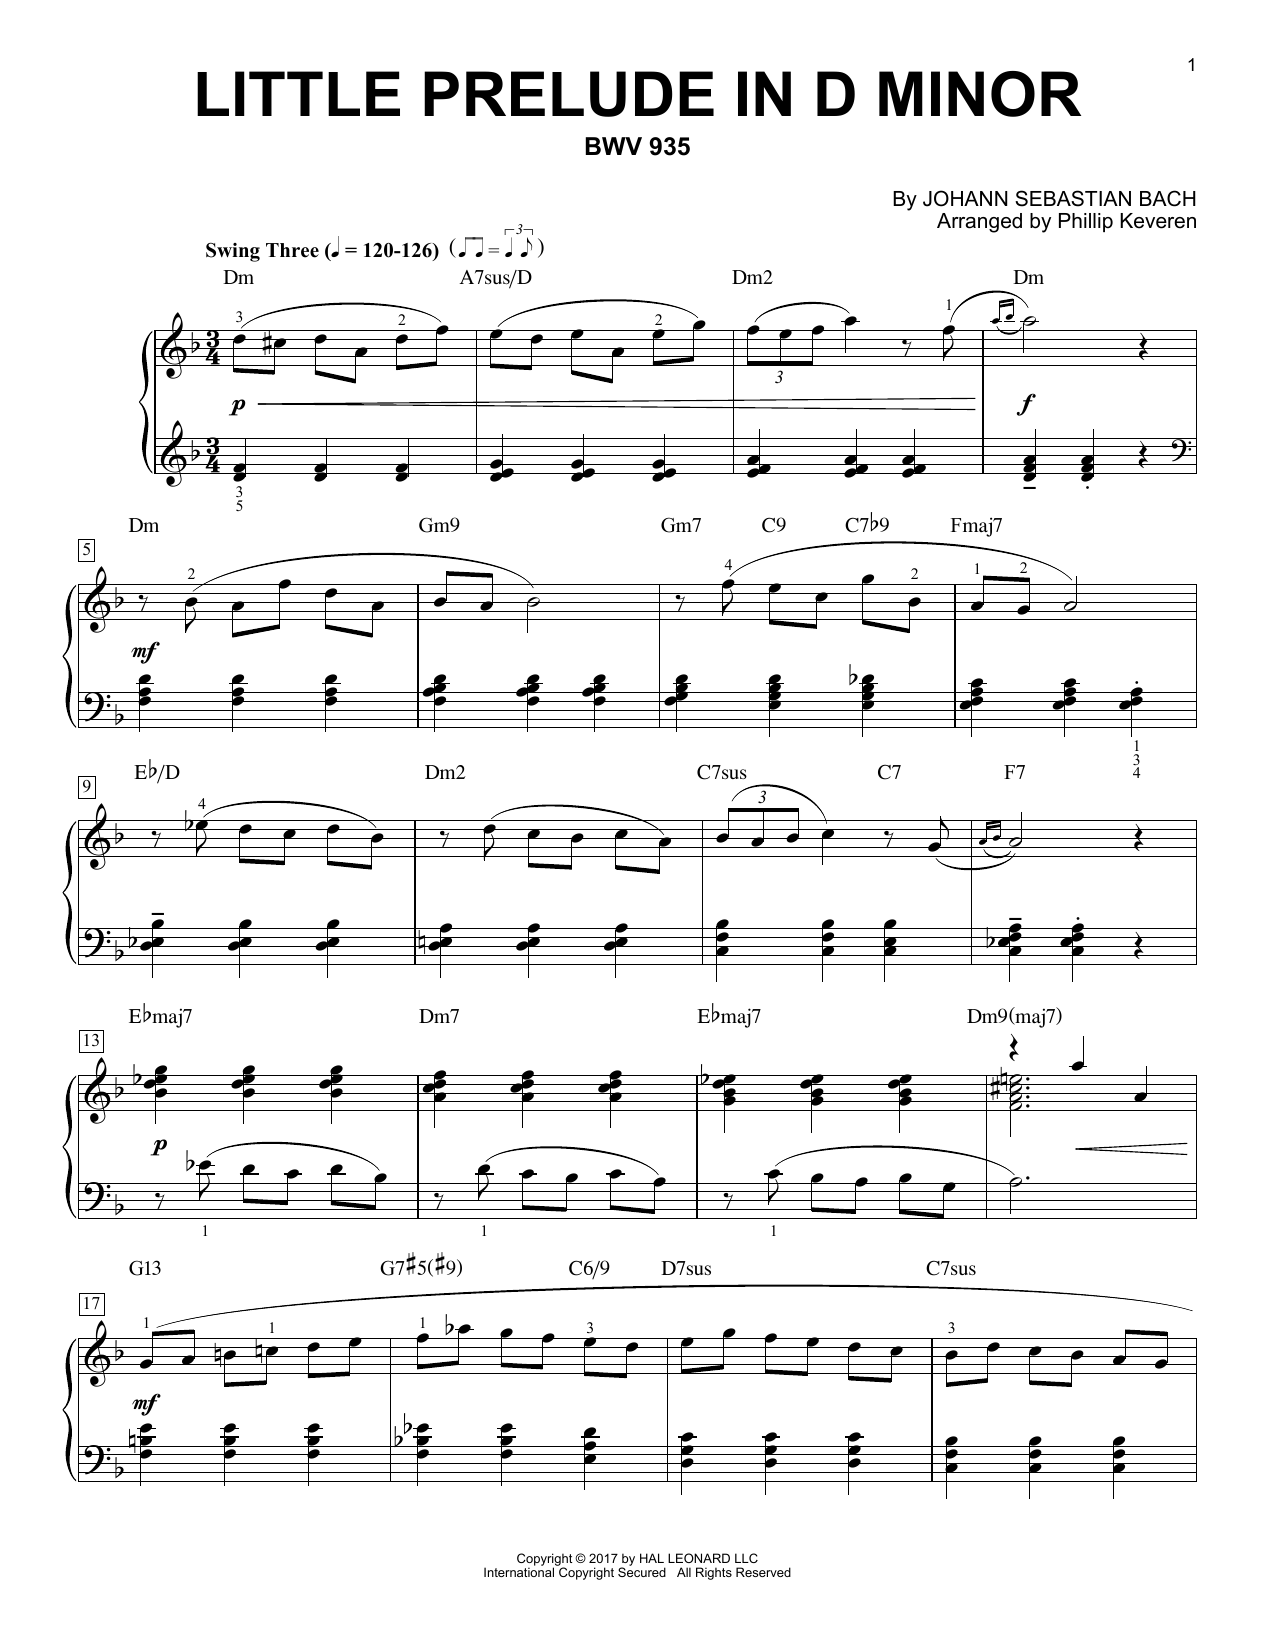 Johann Sebastian Bach Little Prelude In D Minor, BWV 935 [Jazz version] (arr. Phillip Keveren) Sheet Music Notes & Chords for Piano - Download or Print PDF